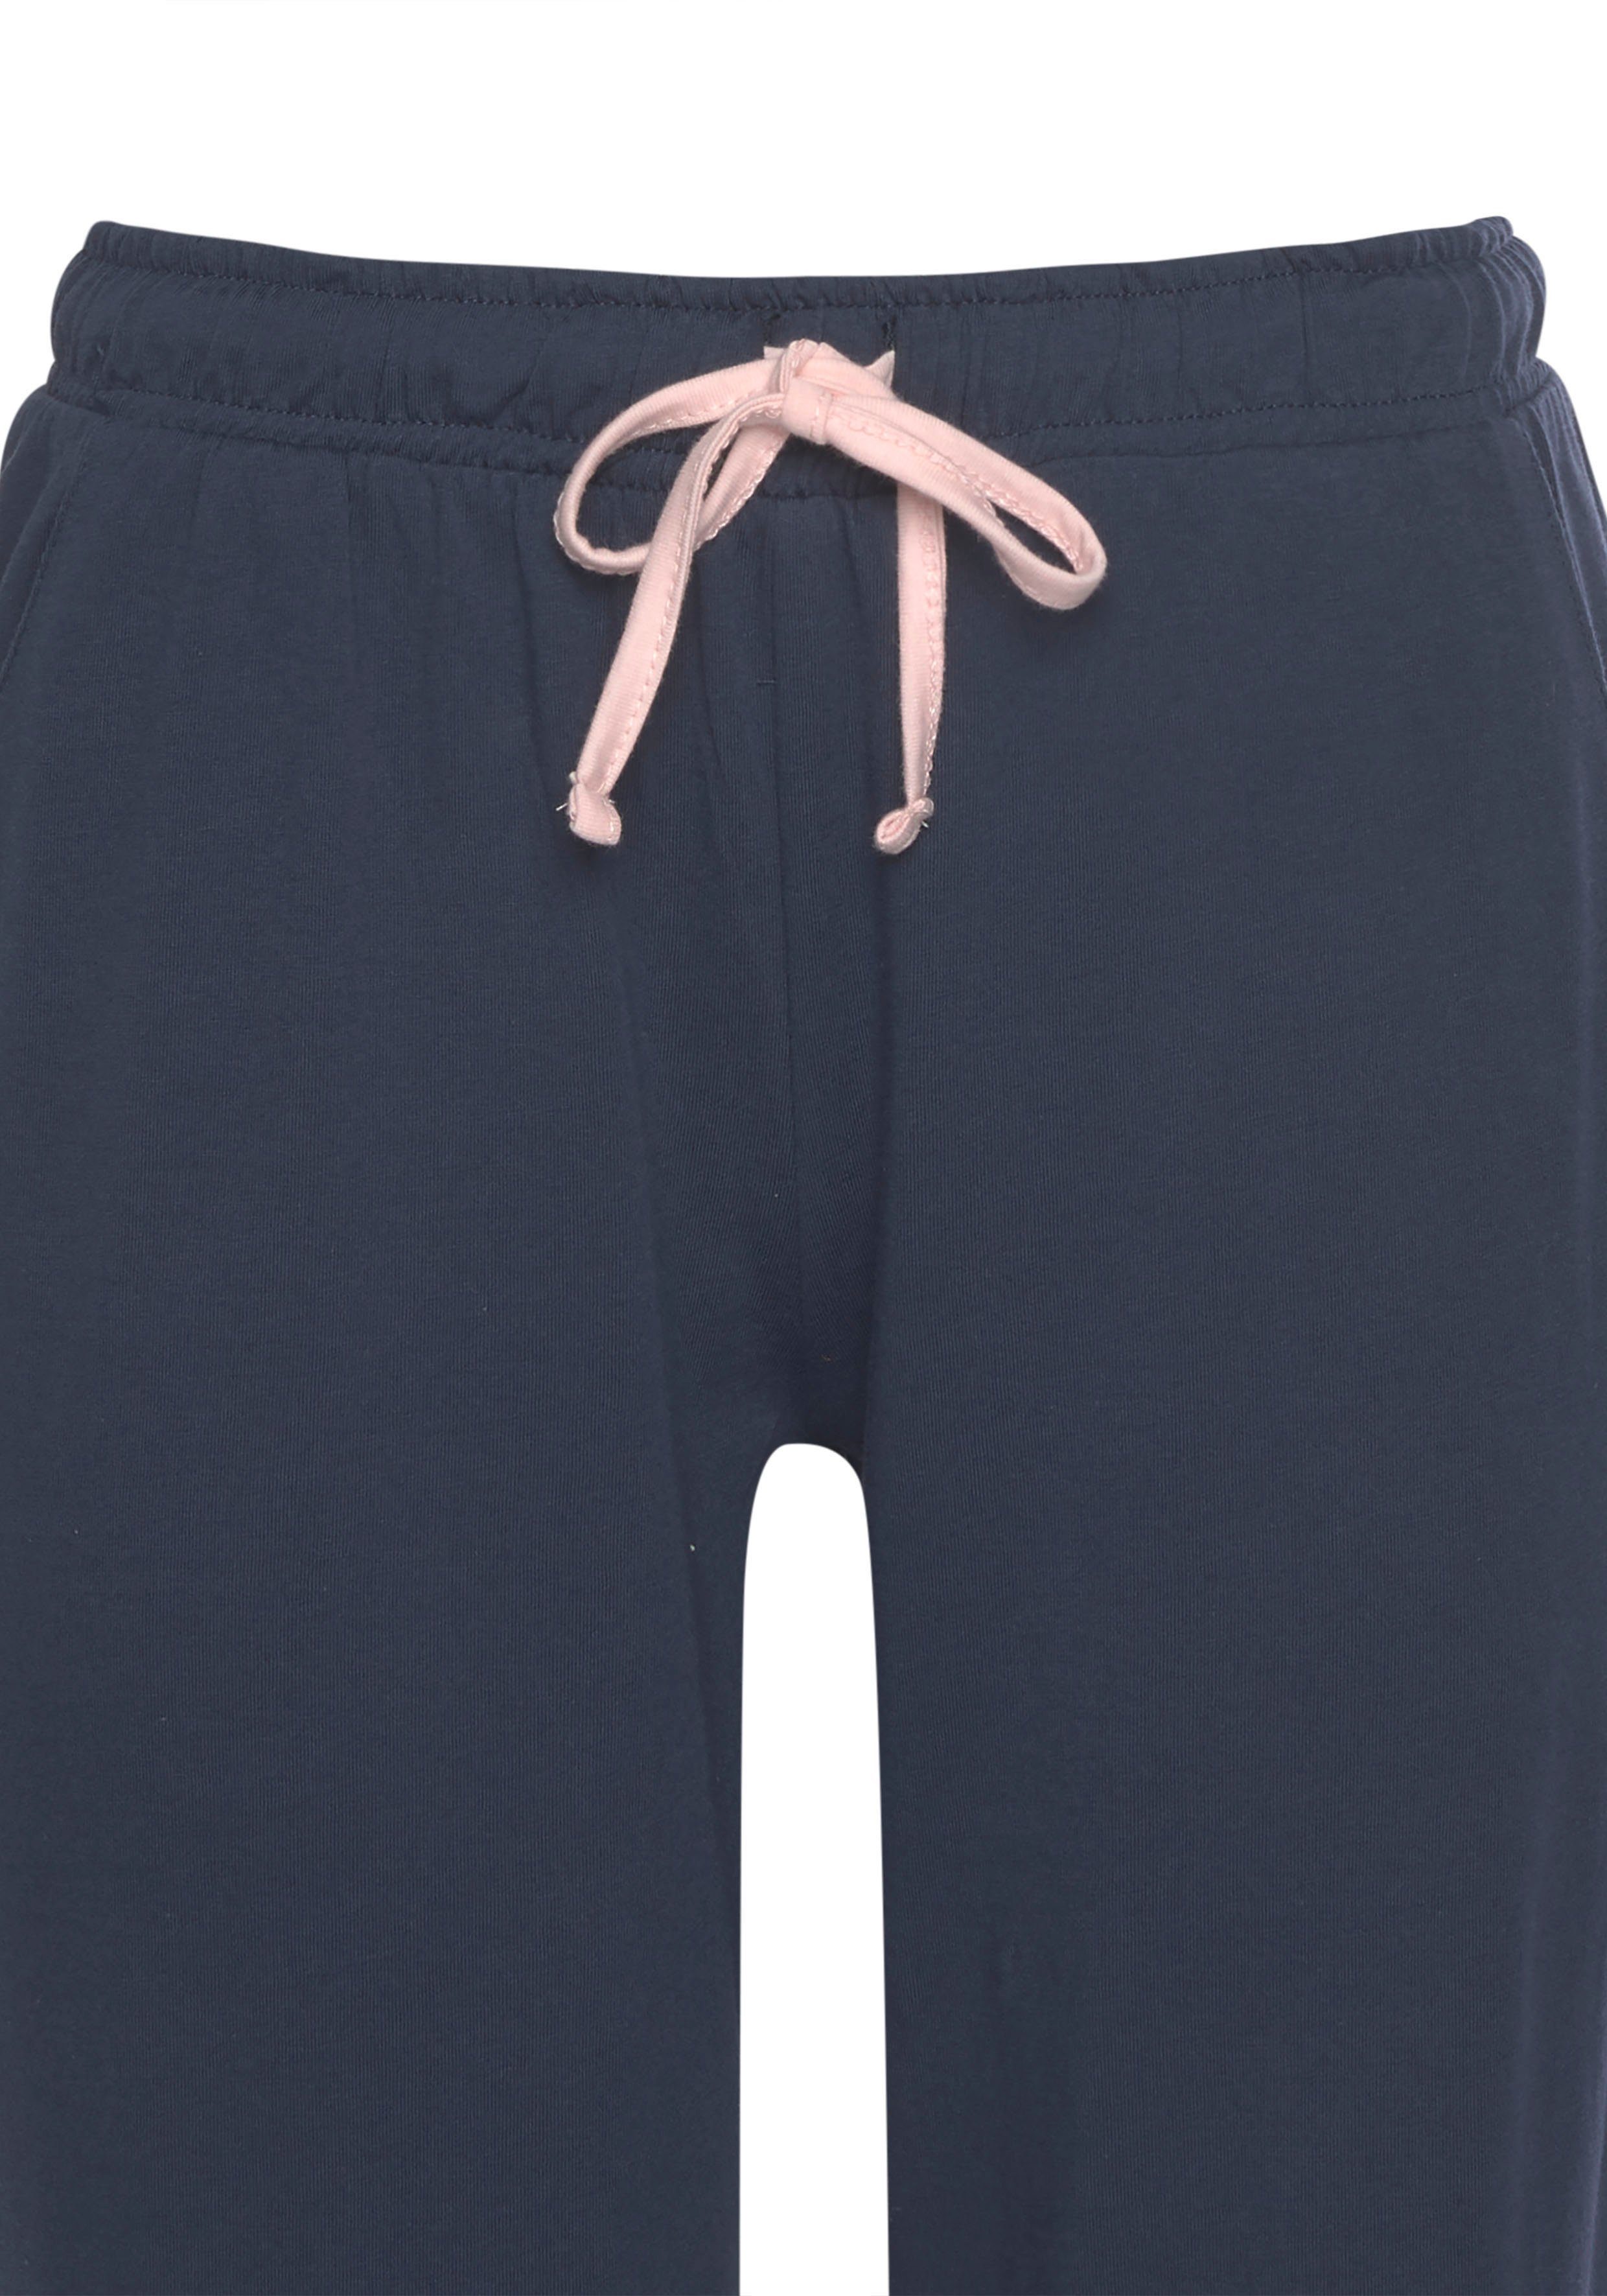 tlg., Raglanärmeln Stück) (2 rosa-dunkelblau KangaROOS Pyjama mit kontrastfarbenen 1